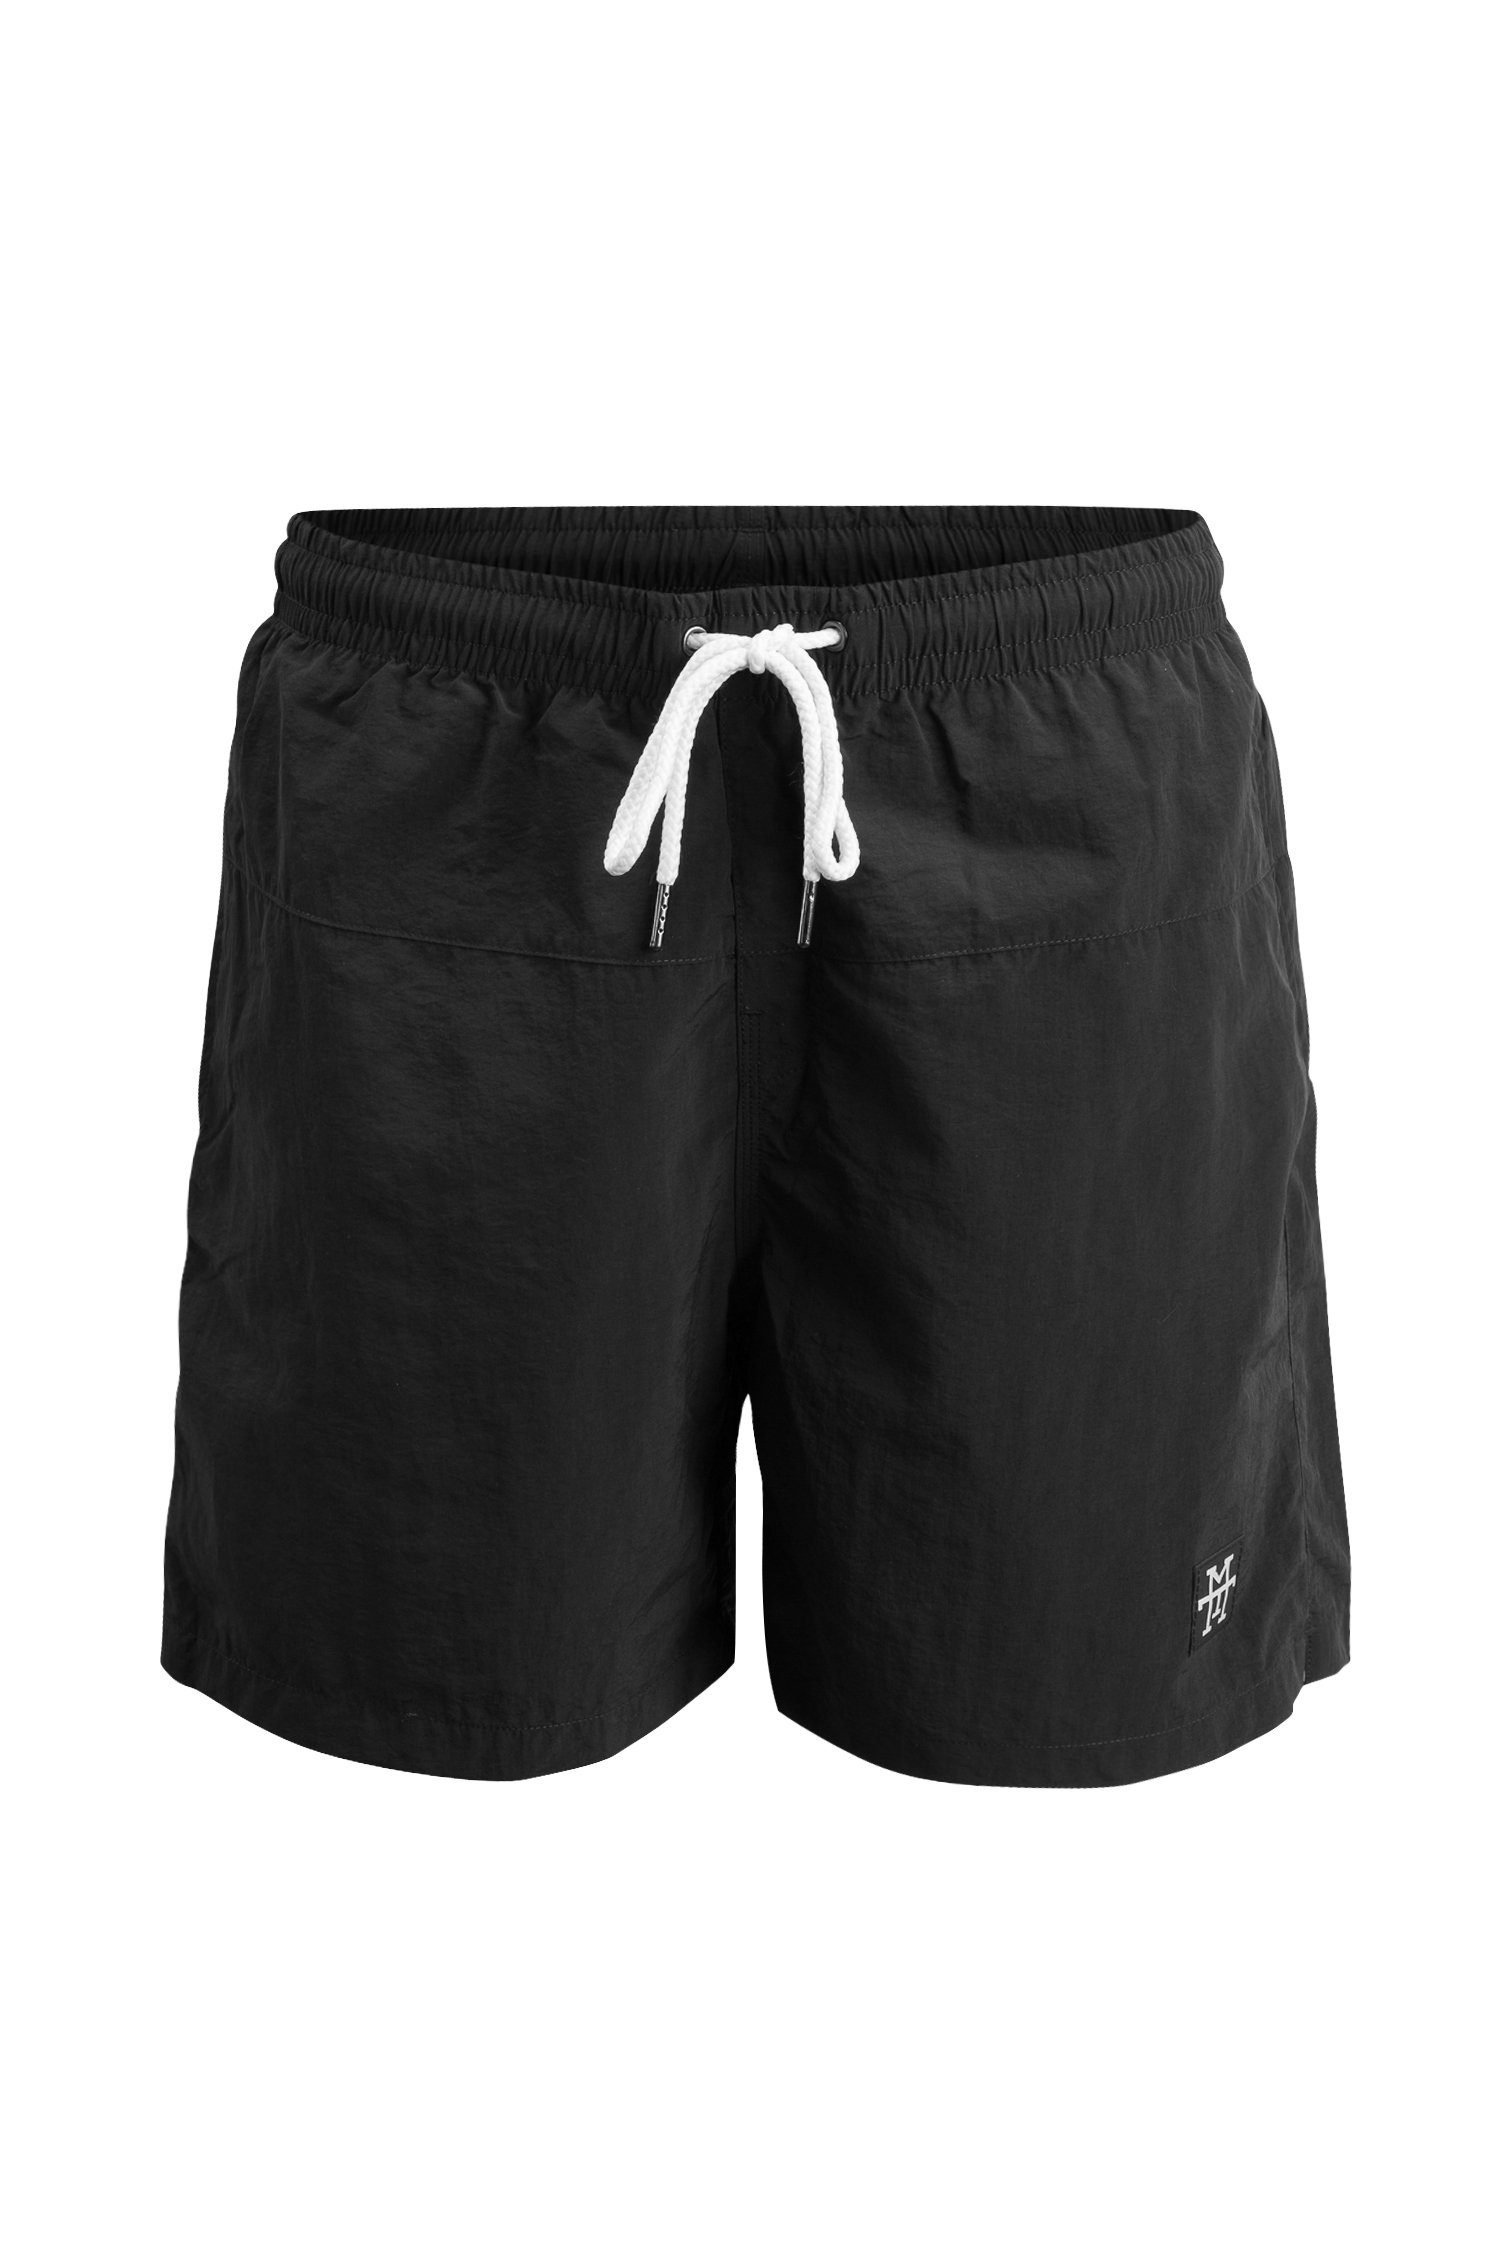 Manufaktur13 Badeshorts Swim Shorts - schnelltrocknend Out Black Badehosen